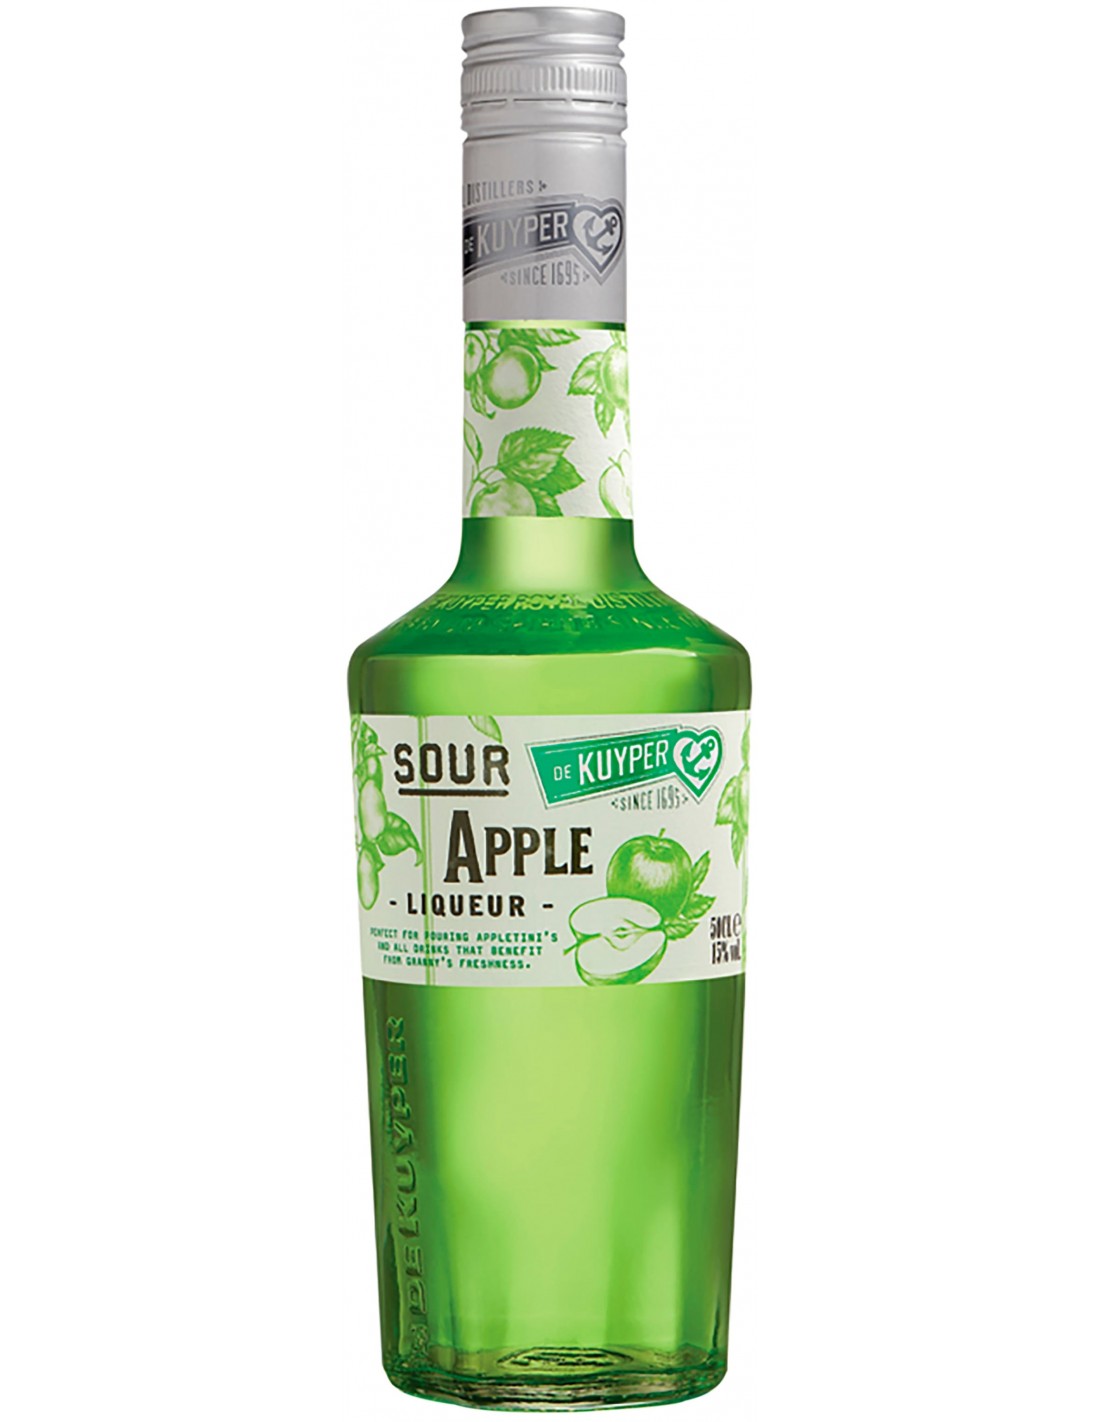 Lichior De Kuyper Sour Apple, 15% alc., 0.7L, Olanda alcooldiscount.ro